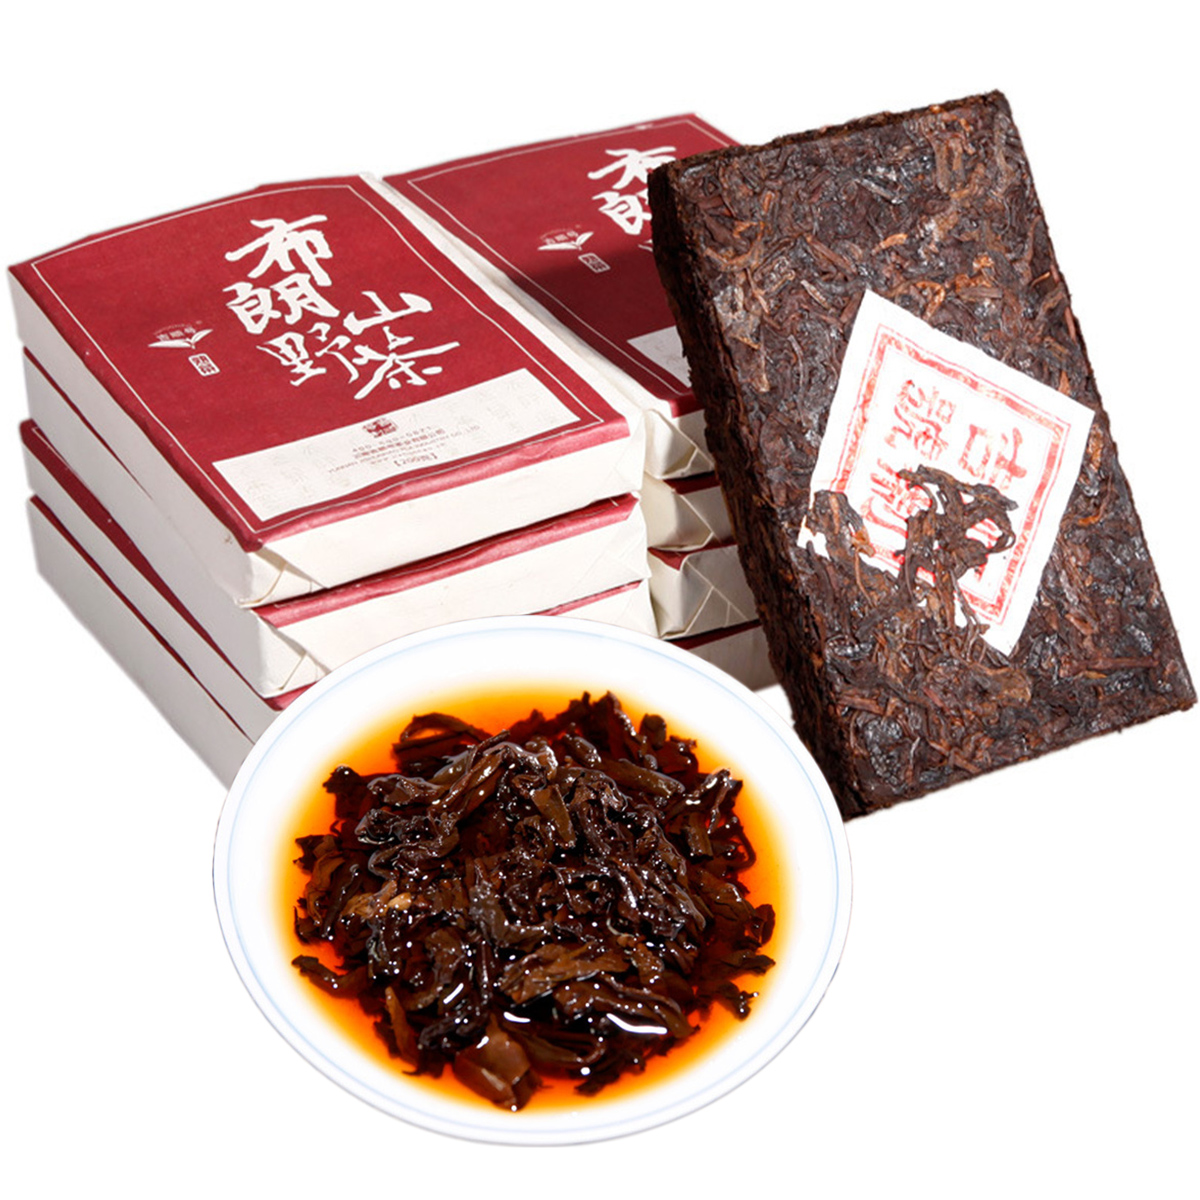 

China ripe pu-erh Tea Ancient Tree Wild pu er yunnan Organic Puer Black Tea 200g Red puerh Chinese Pu'er Tea